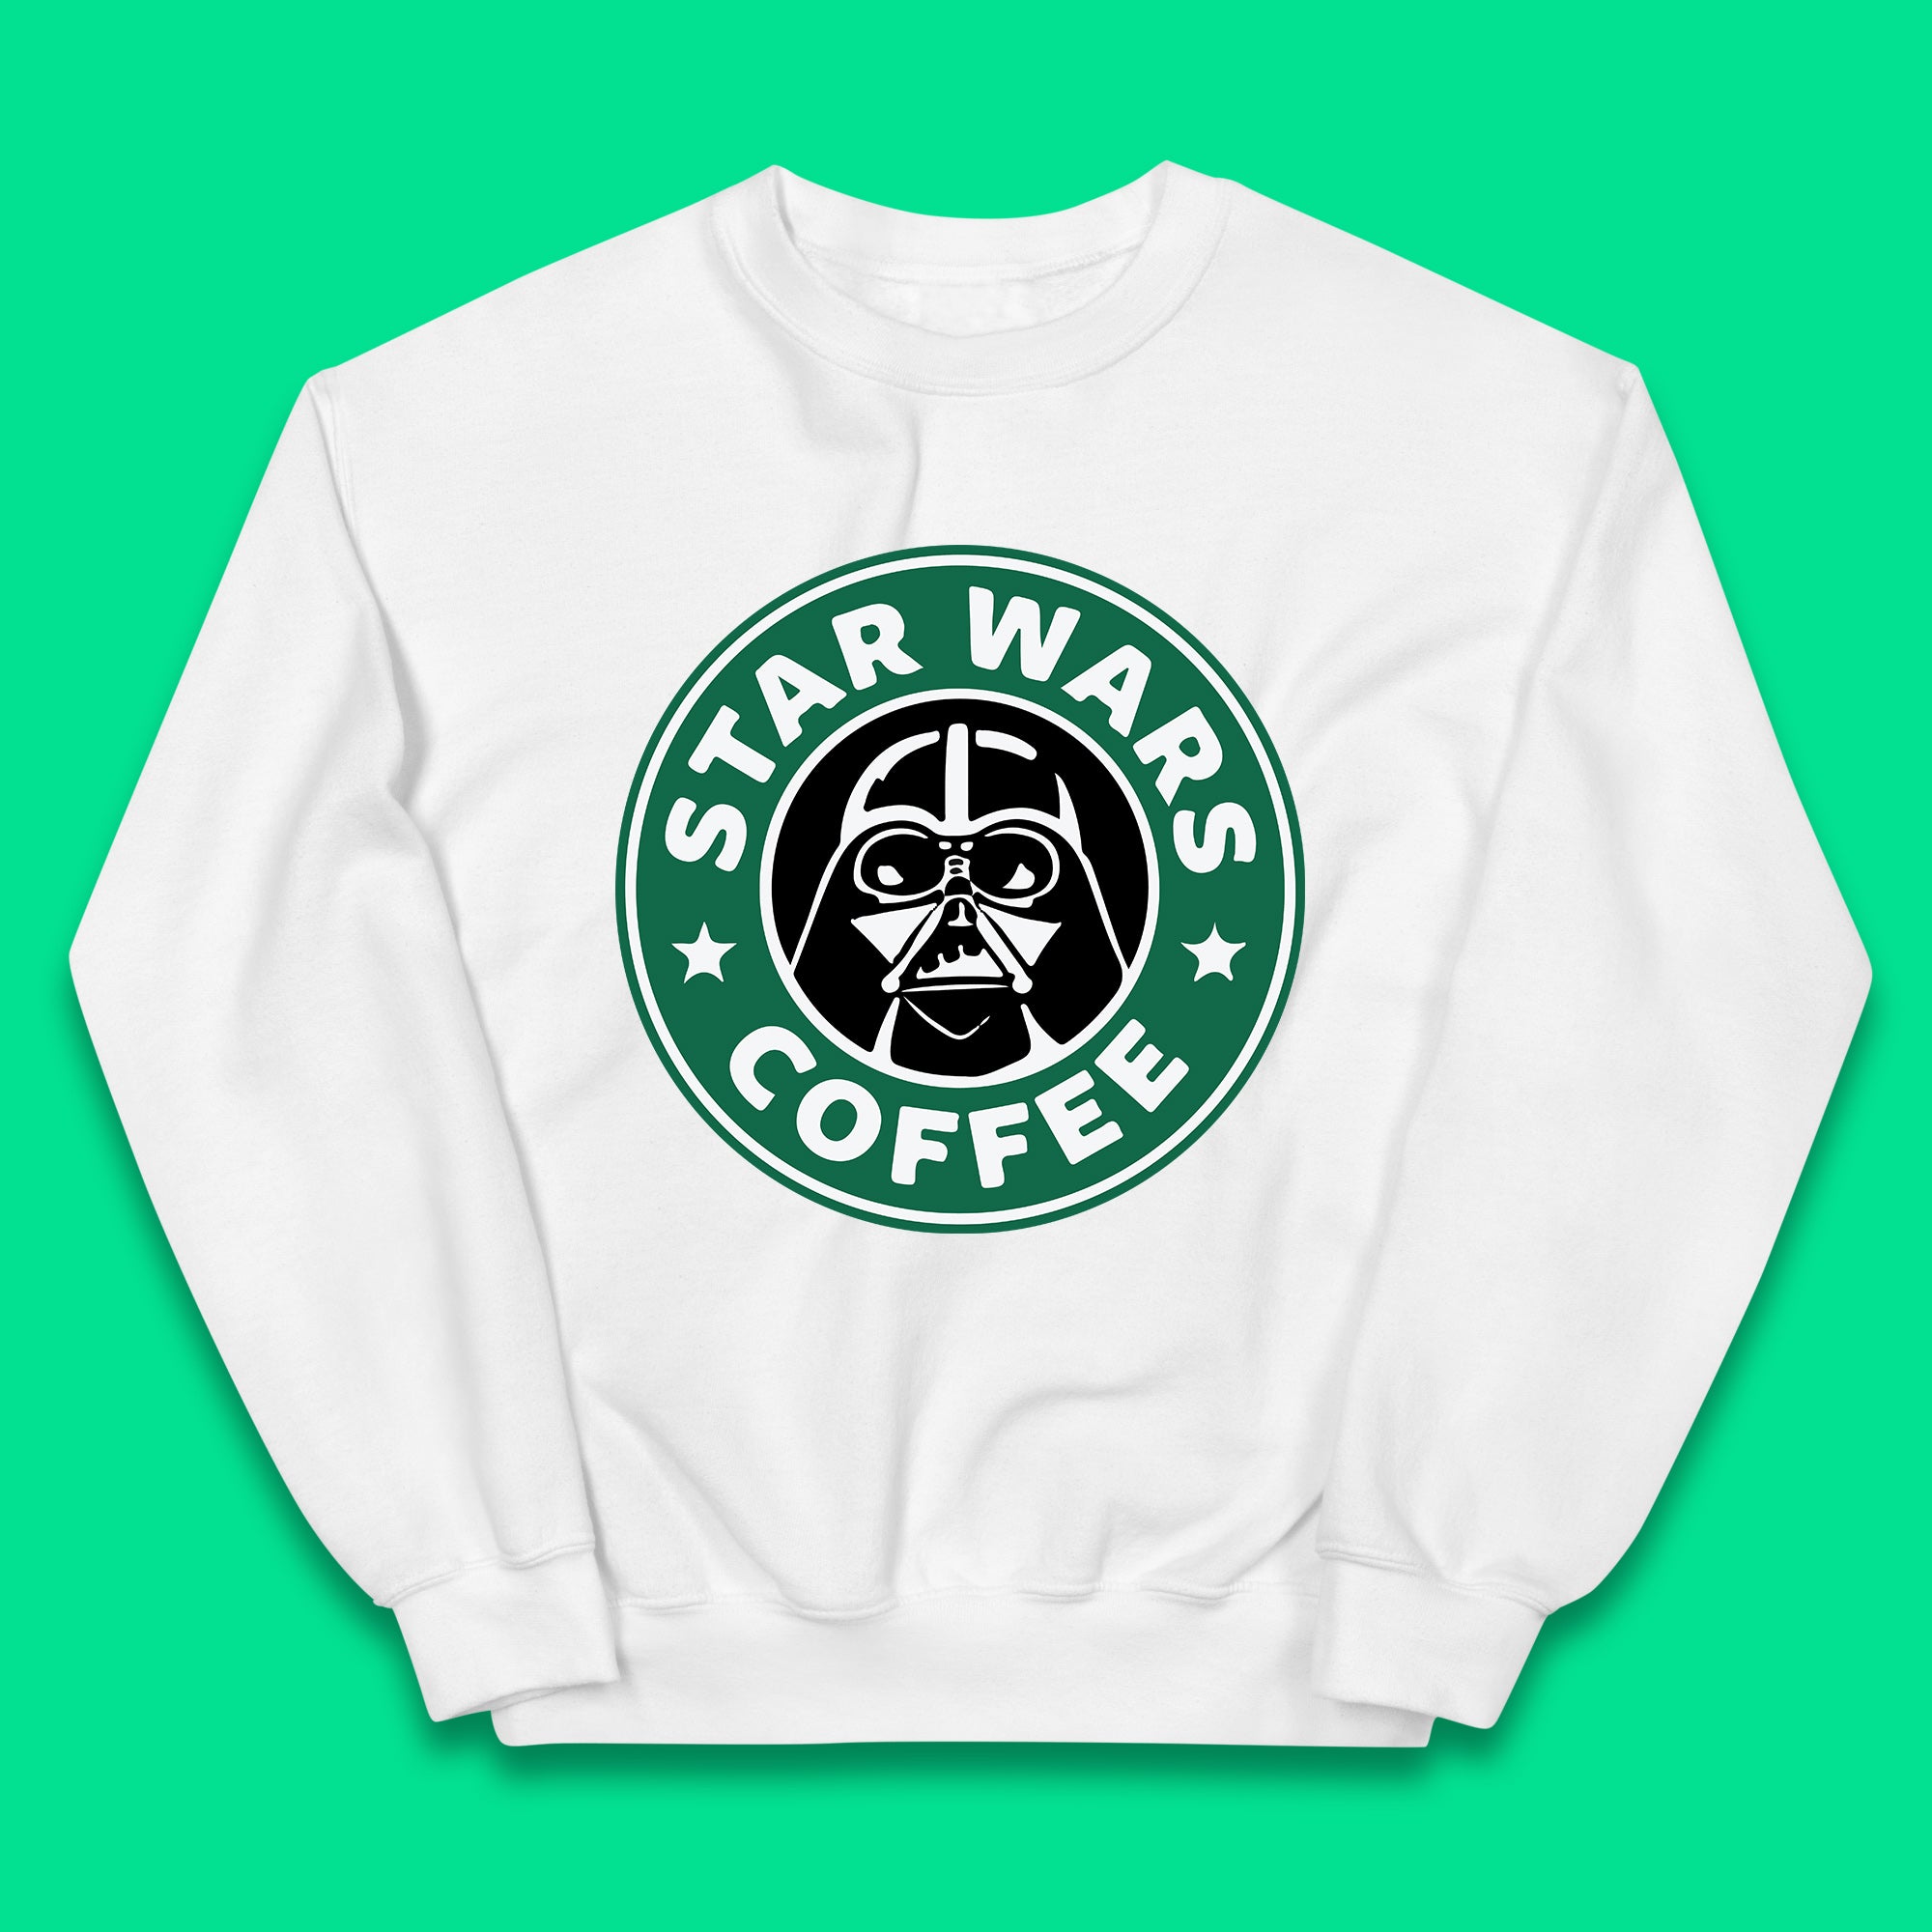 Sci-fi Action Adventure Movie Character Darth Vader Star Wars Coffee Starbucks Coffee Spoof Star Wars 46th Anniversary Kids Jumper